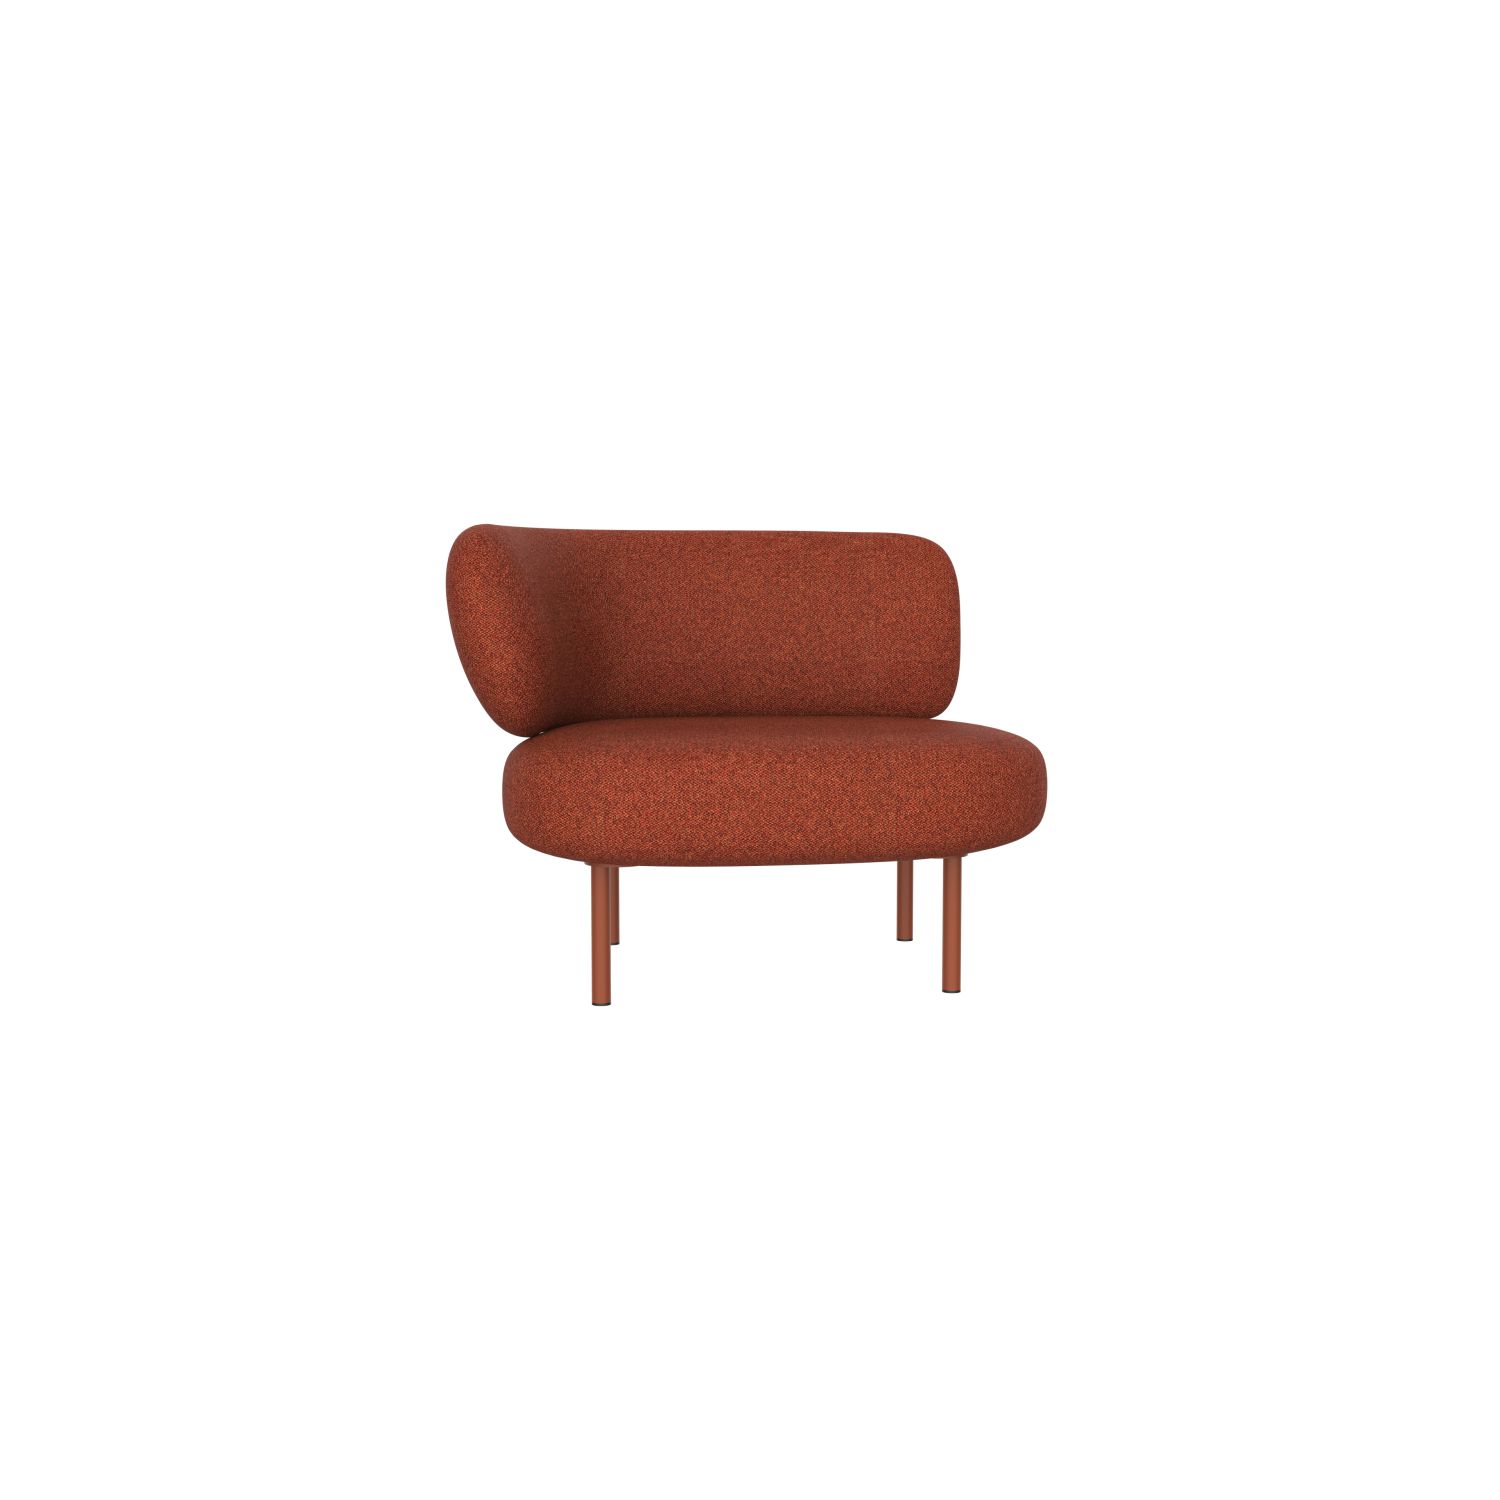 lensvelt studio stefan scholten sofa 1seater 100x77cm lounge part right moss clay brown 65 frame copper brown ral8004